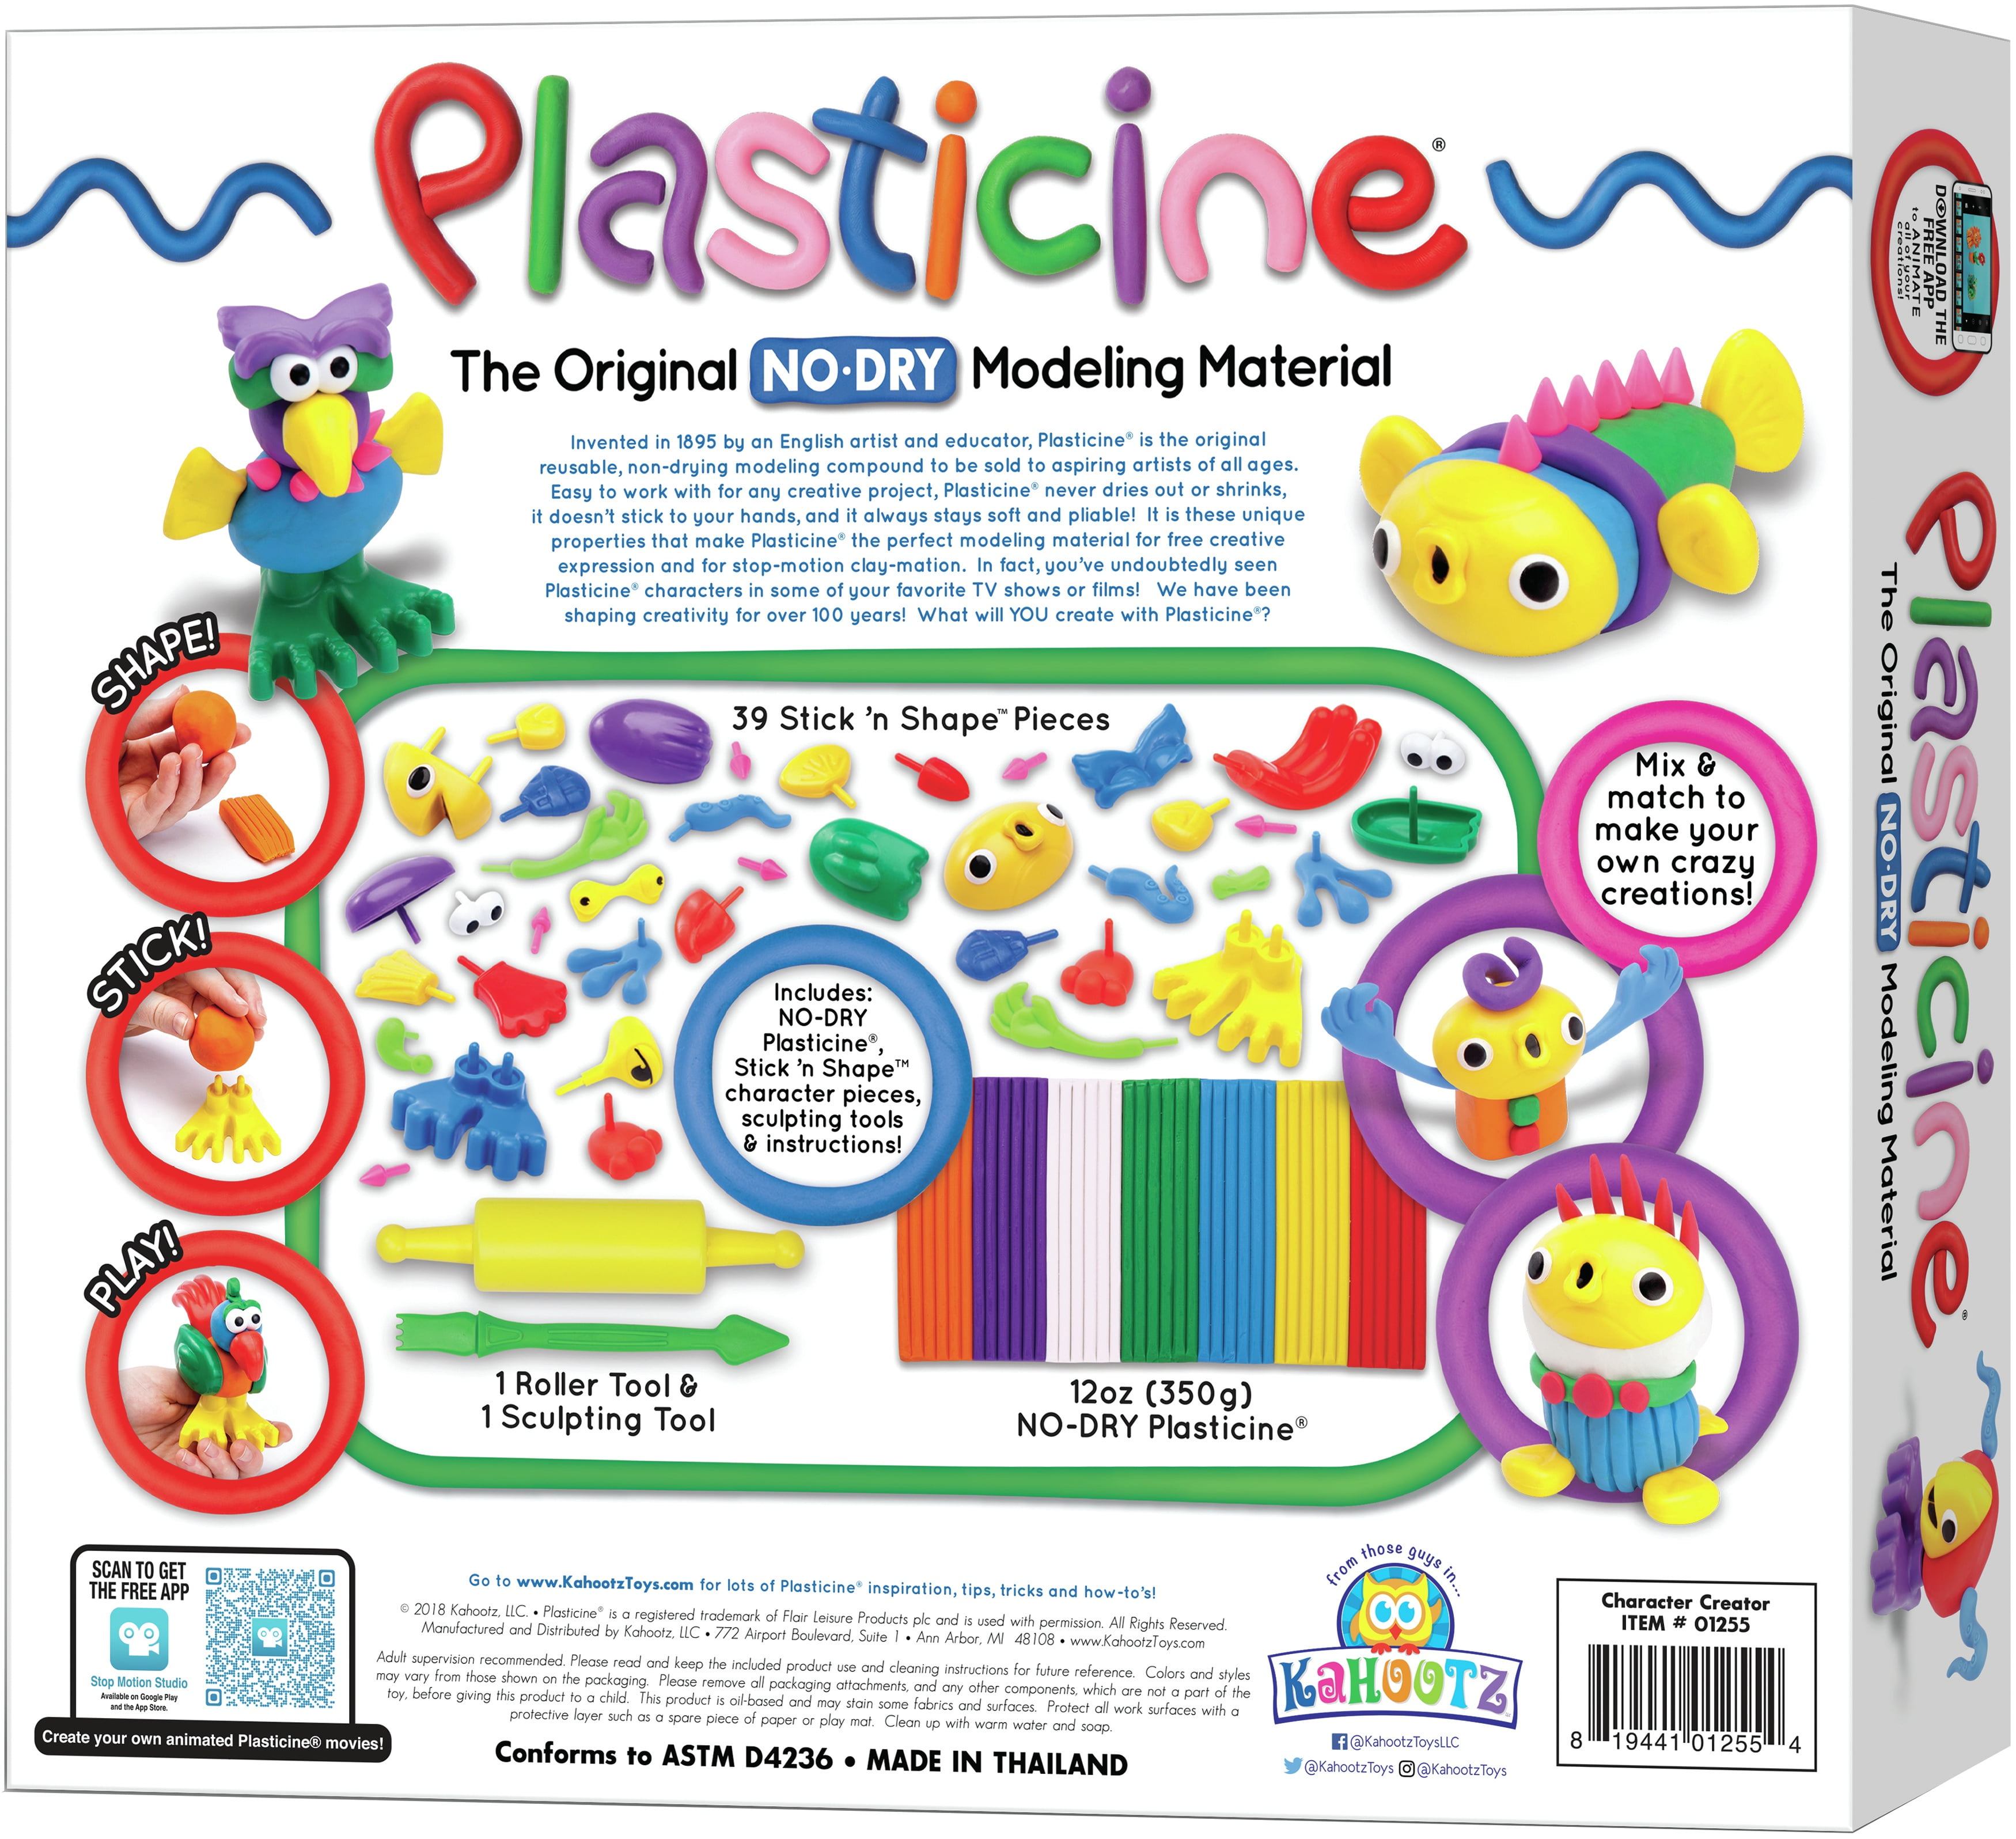 Plasticine Character Creations Kit